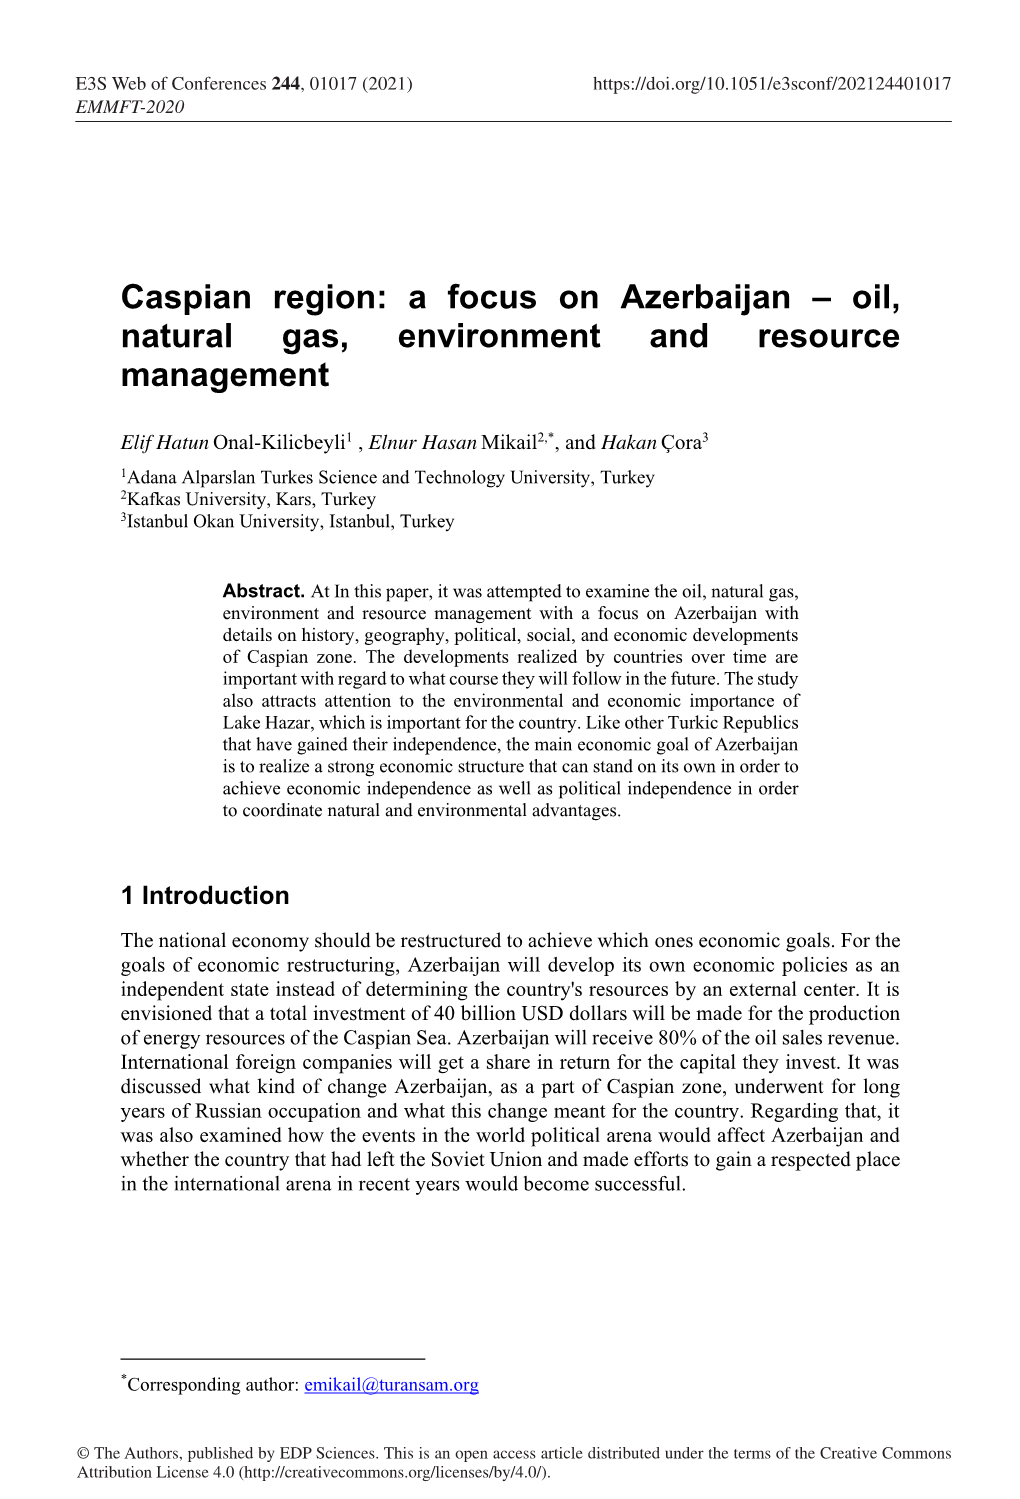 Caspian Region: a Focus on Azerbaijan – Oil, Natural Gas, Environment and Resource Management